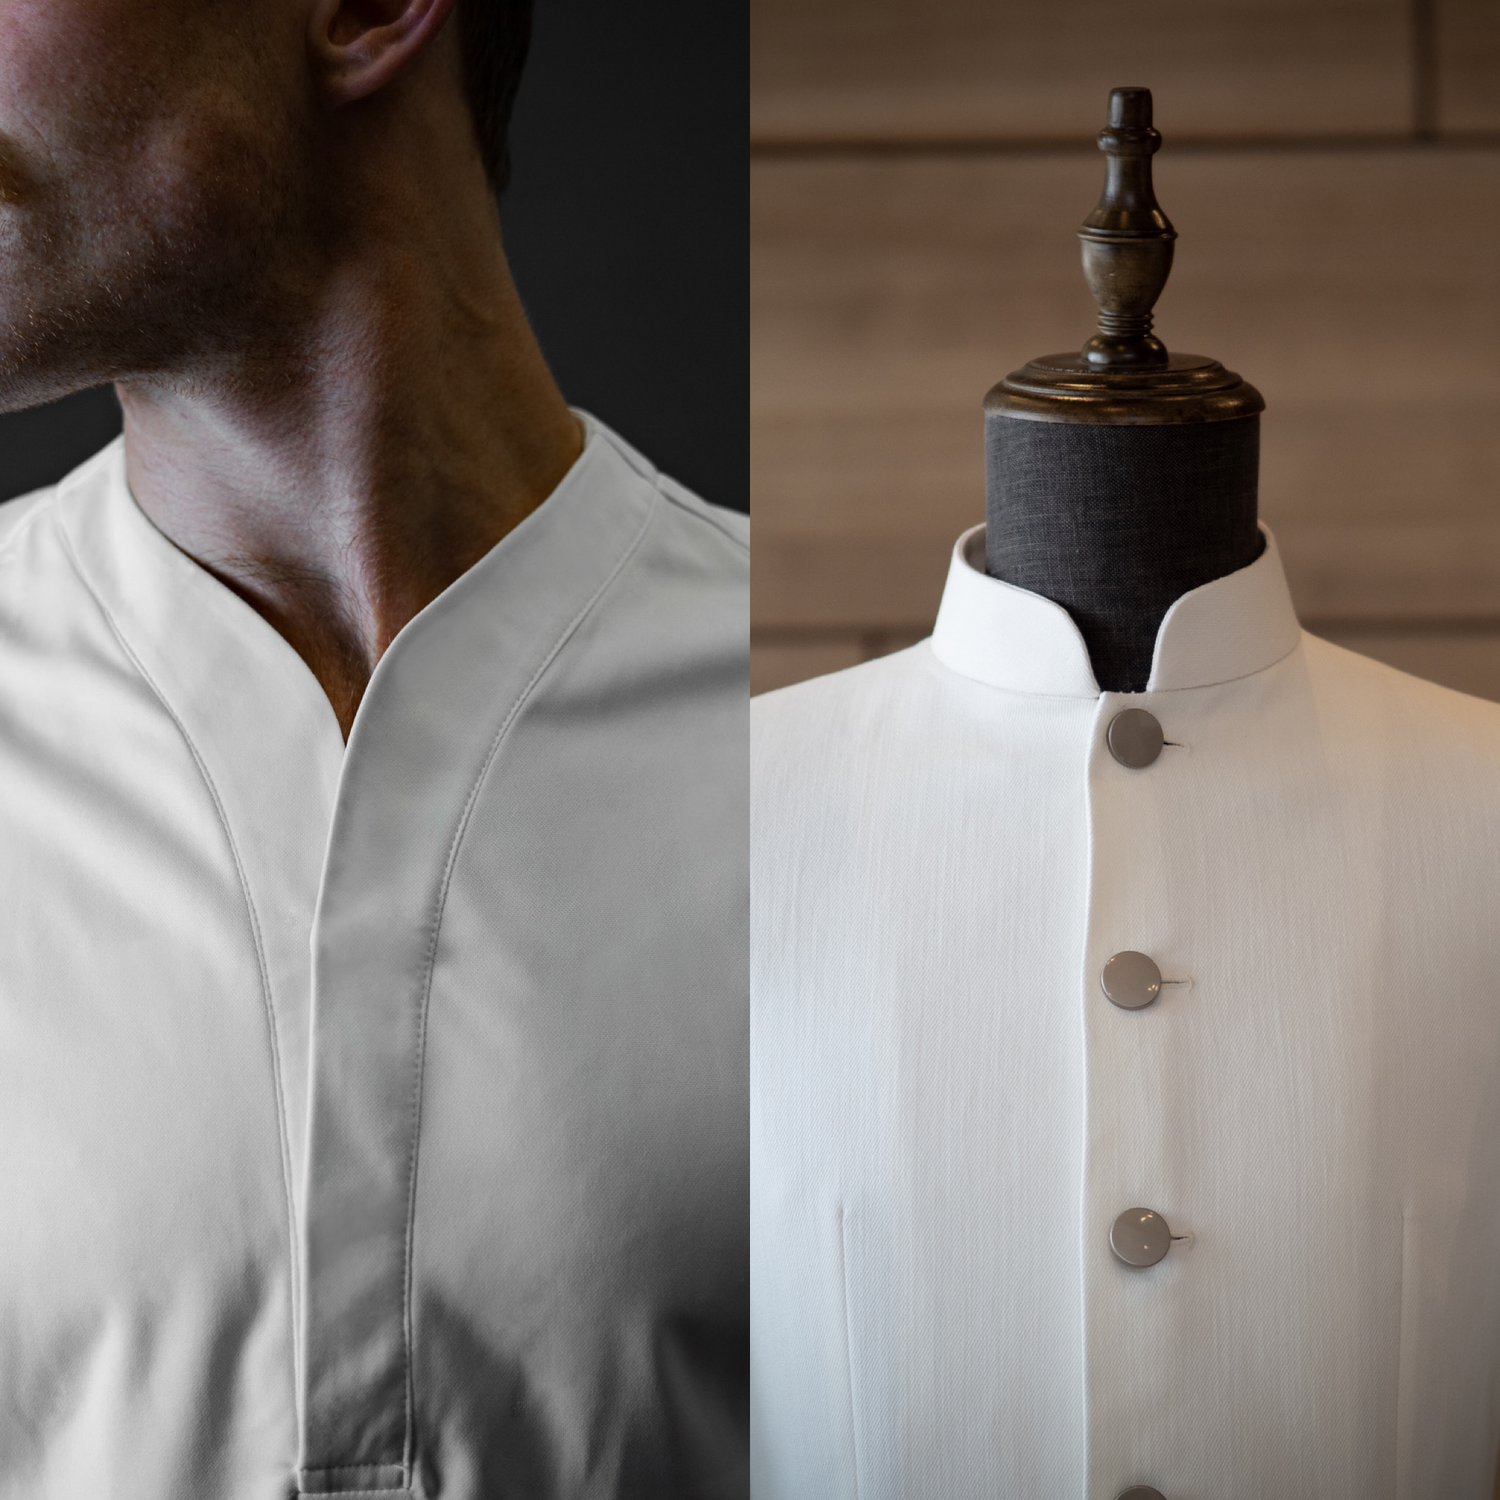 Cheegs collarless dress shirt vs a men's mandarin collared shirt comparison 